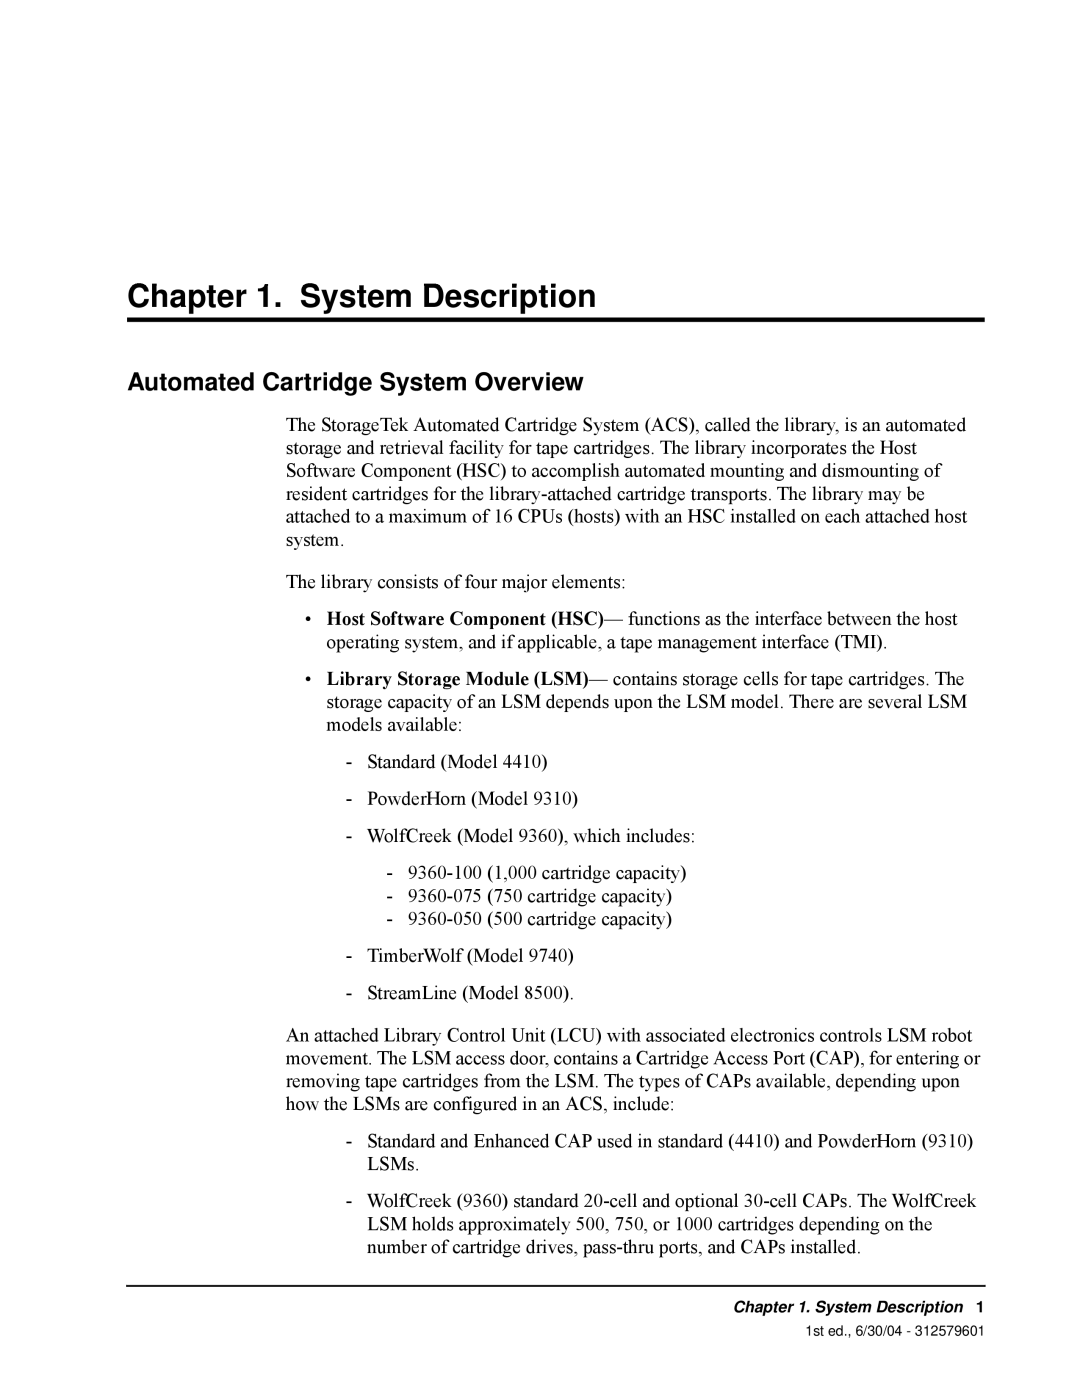 StorageTek 6 manual System Description, Automated Cartridge System Overview 